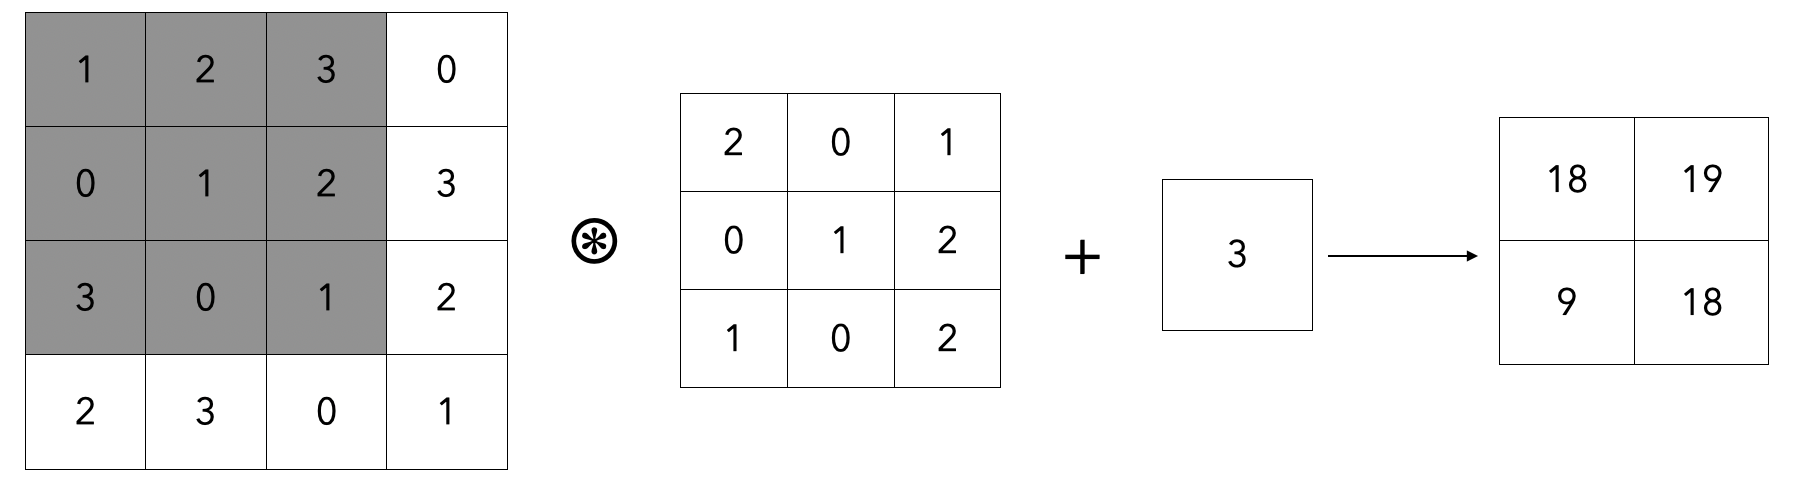 convolution_multiplication_example_2